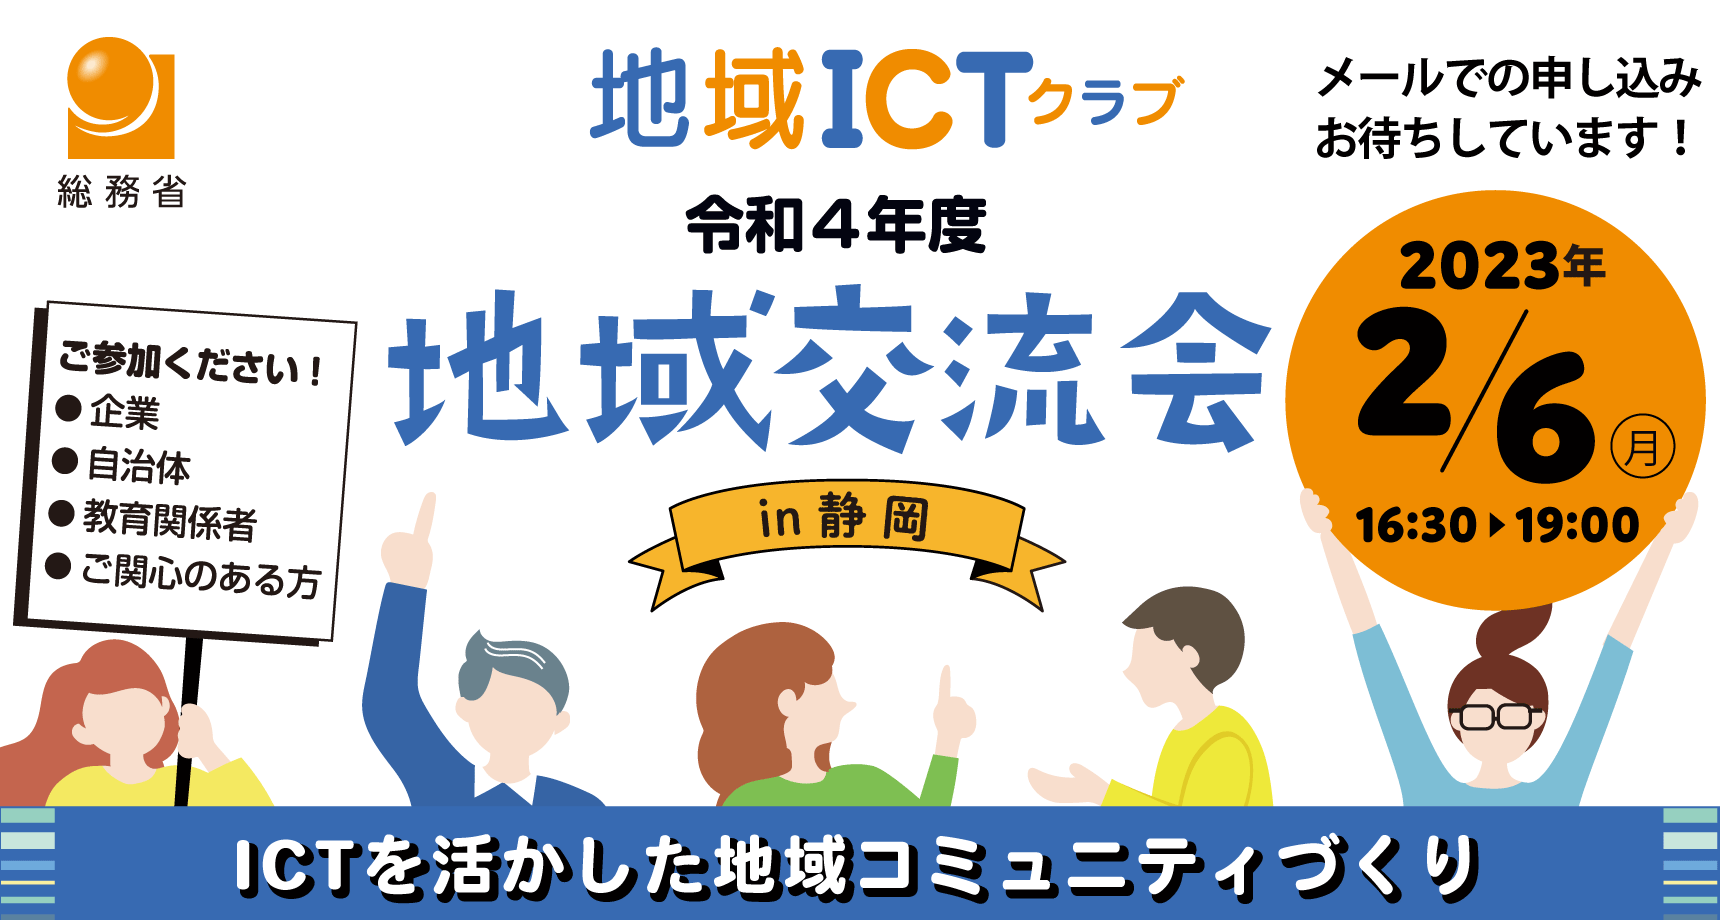 ICTバナー静岡